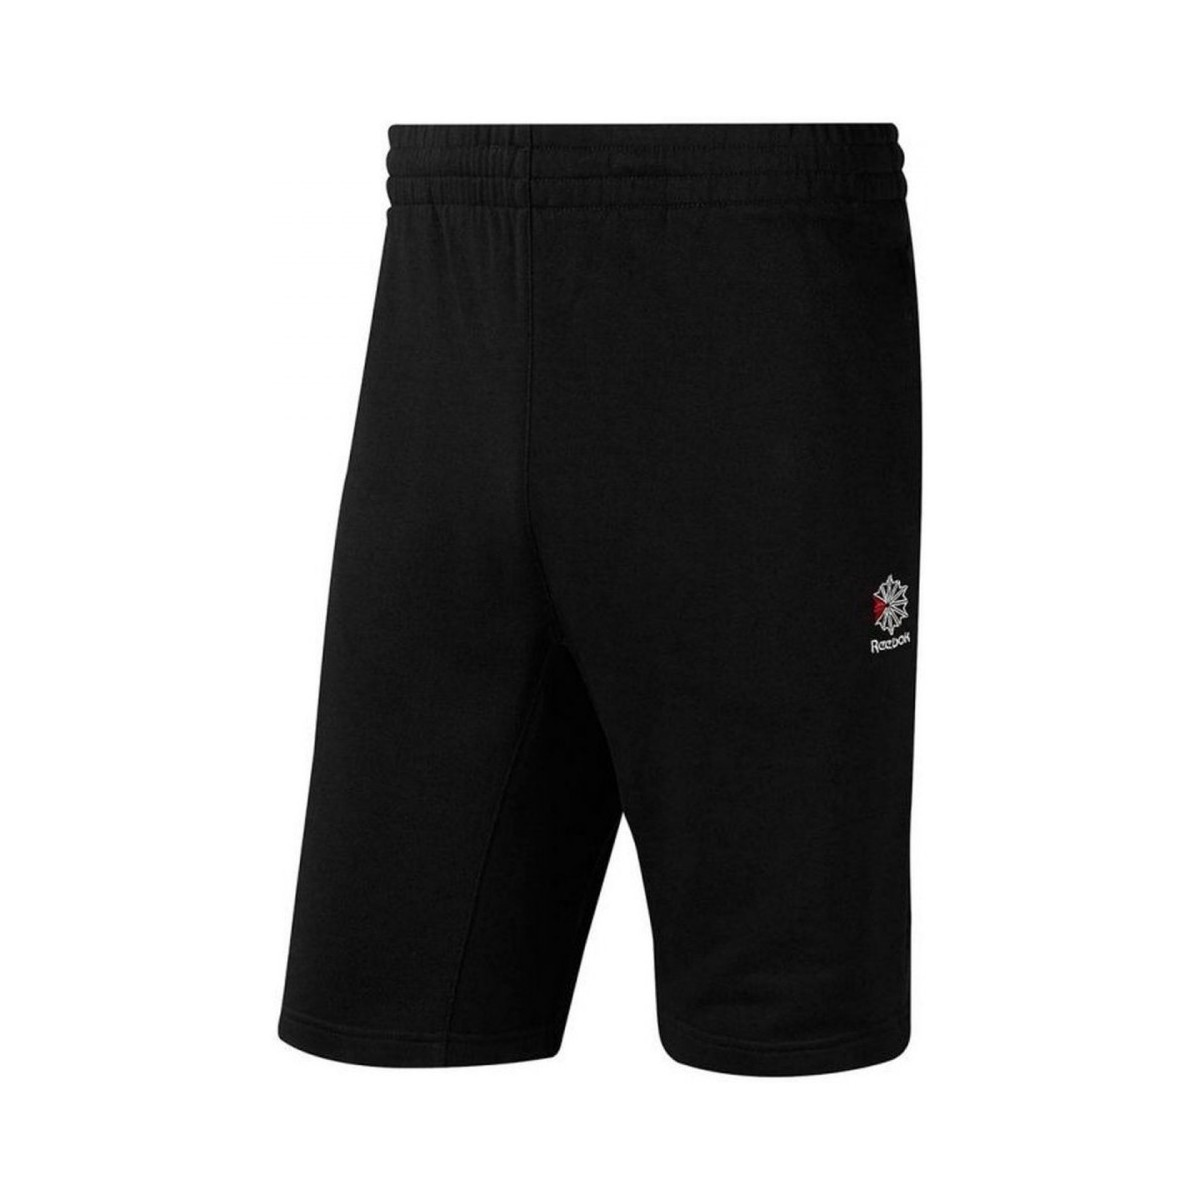 Vêtements Homme Shorts / Bermudas Reebok Sport Sport Tops Noir